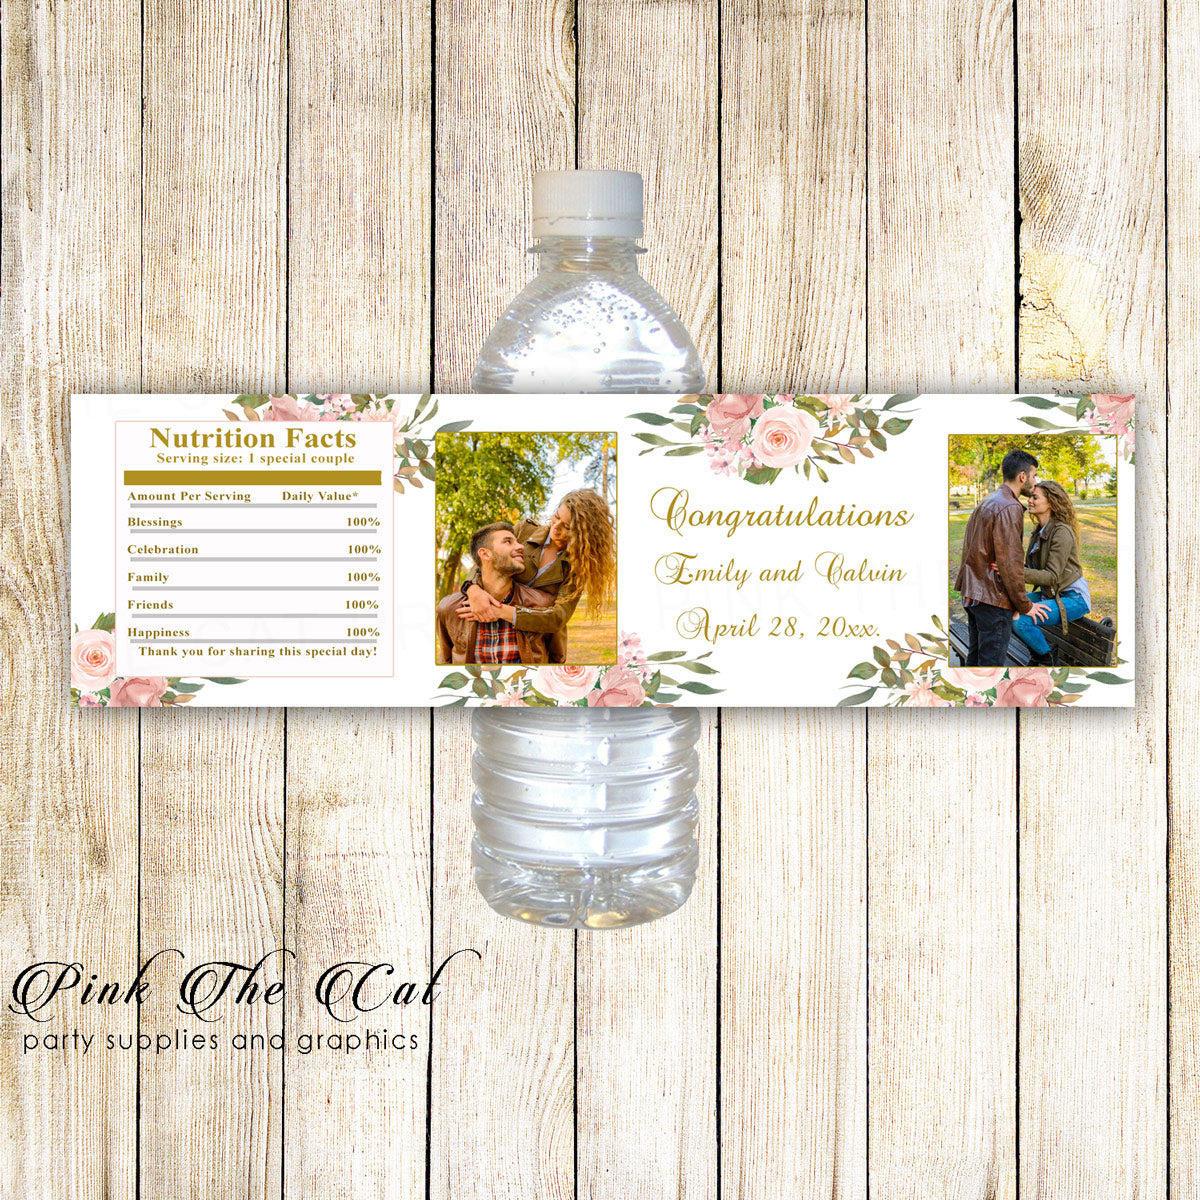 Floral Mason Jar Labels | Thank You Wedding Favor Stickers | Blush Pink  Flower Label | Rustic Baby Bridal Shower Favors Business Sticker